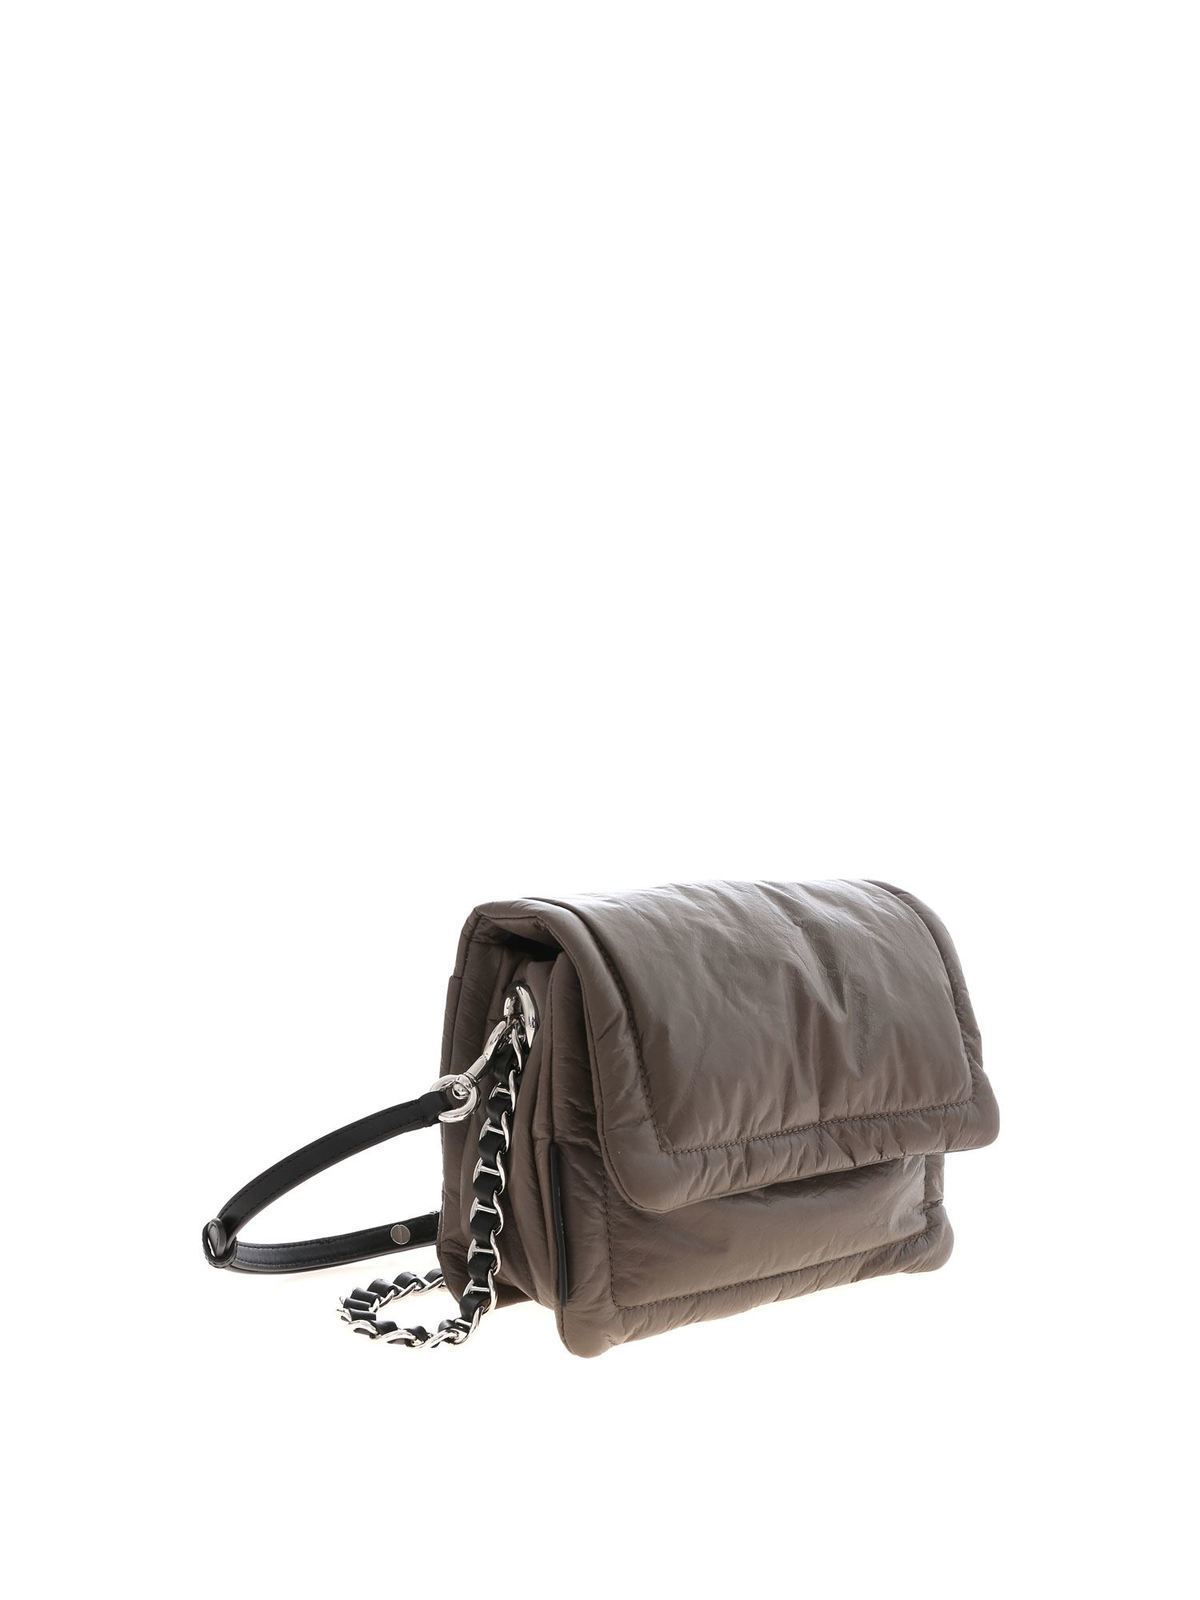 The Mini Cushion Bag by Marc Jacobs Handbags for $73